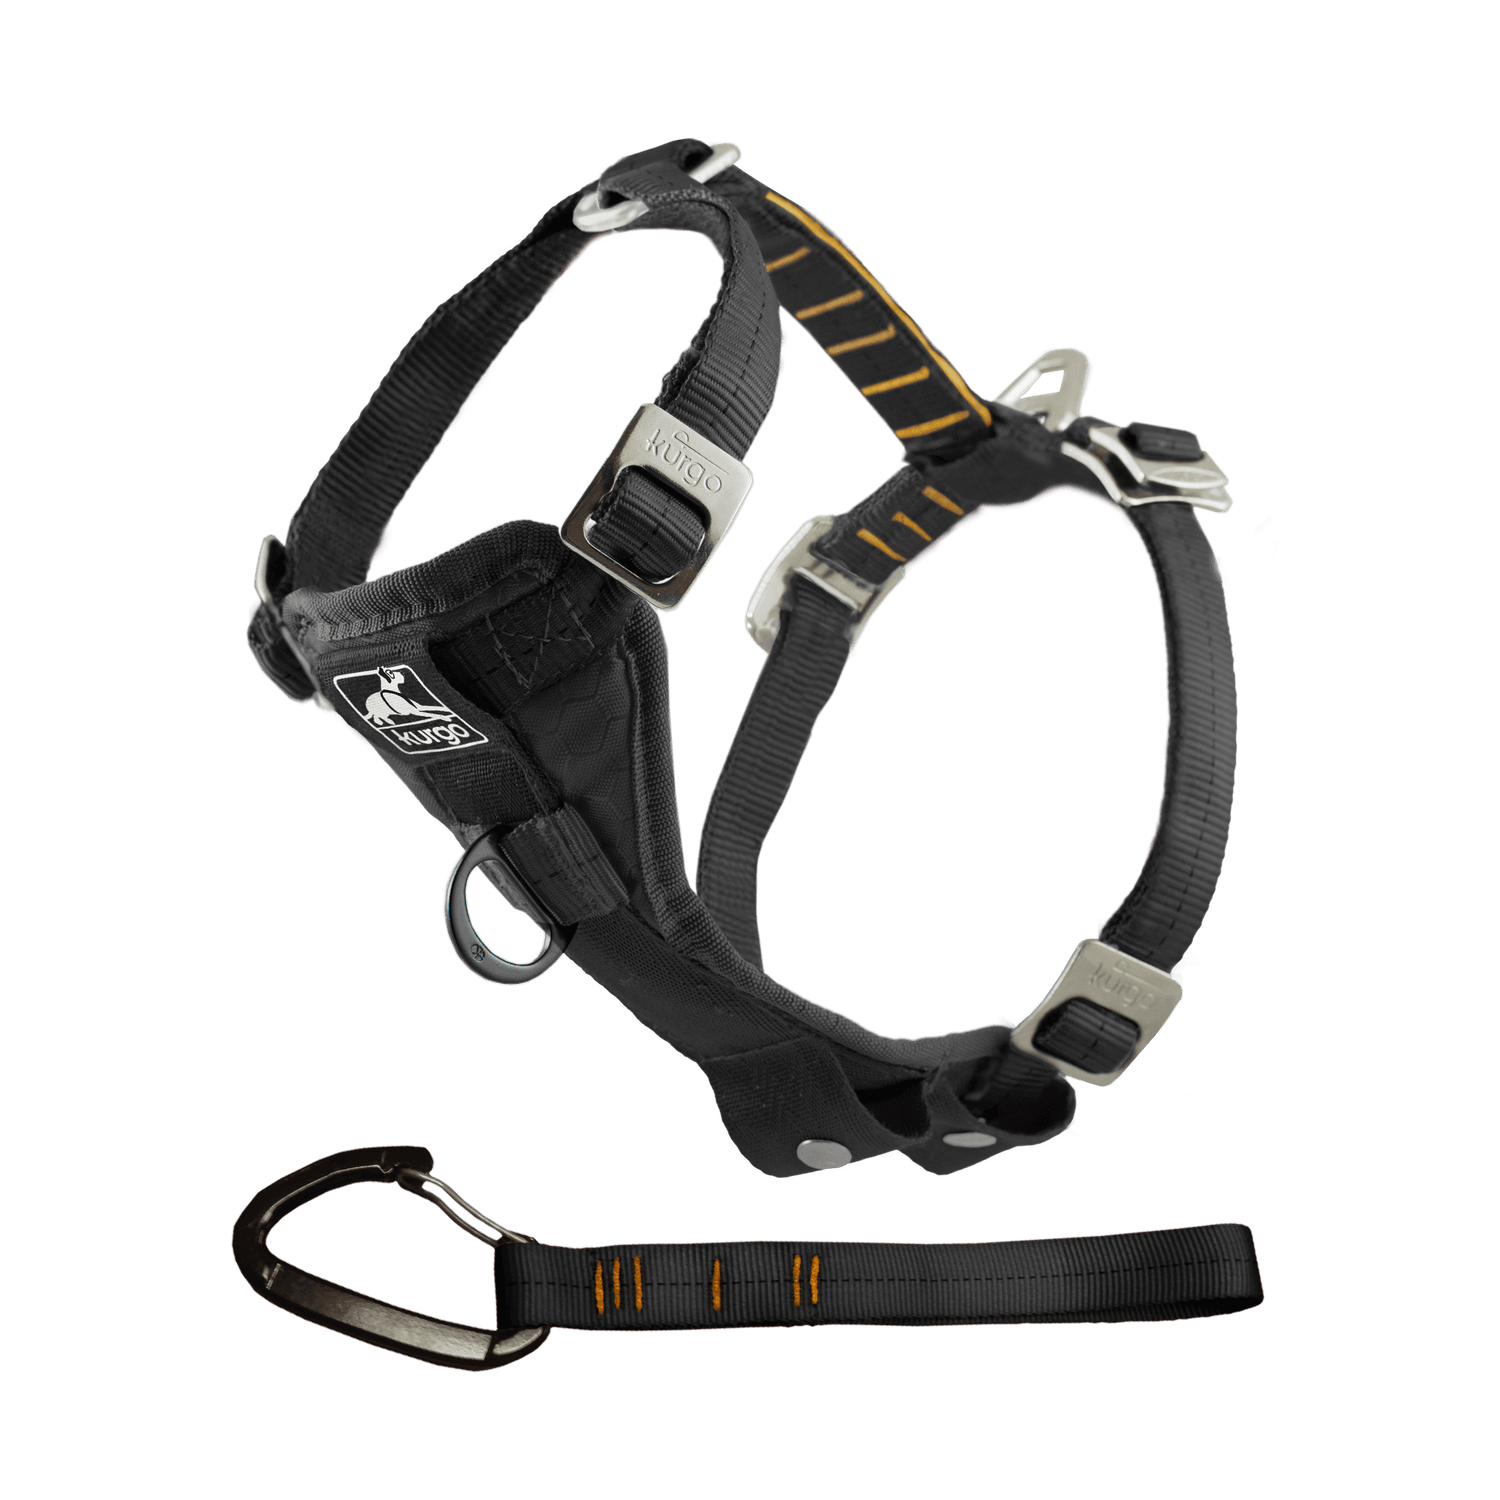 Kurgo Enhanced Strength Tru-Fit Smart Harness - Black, Large